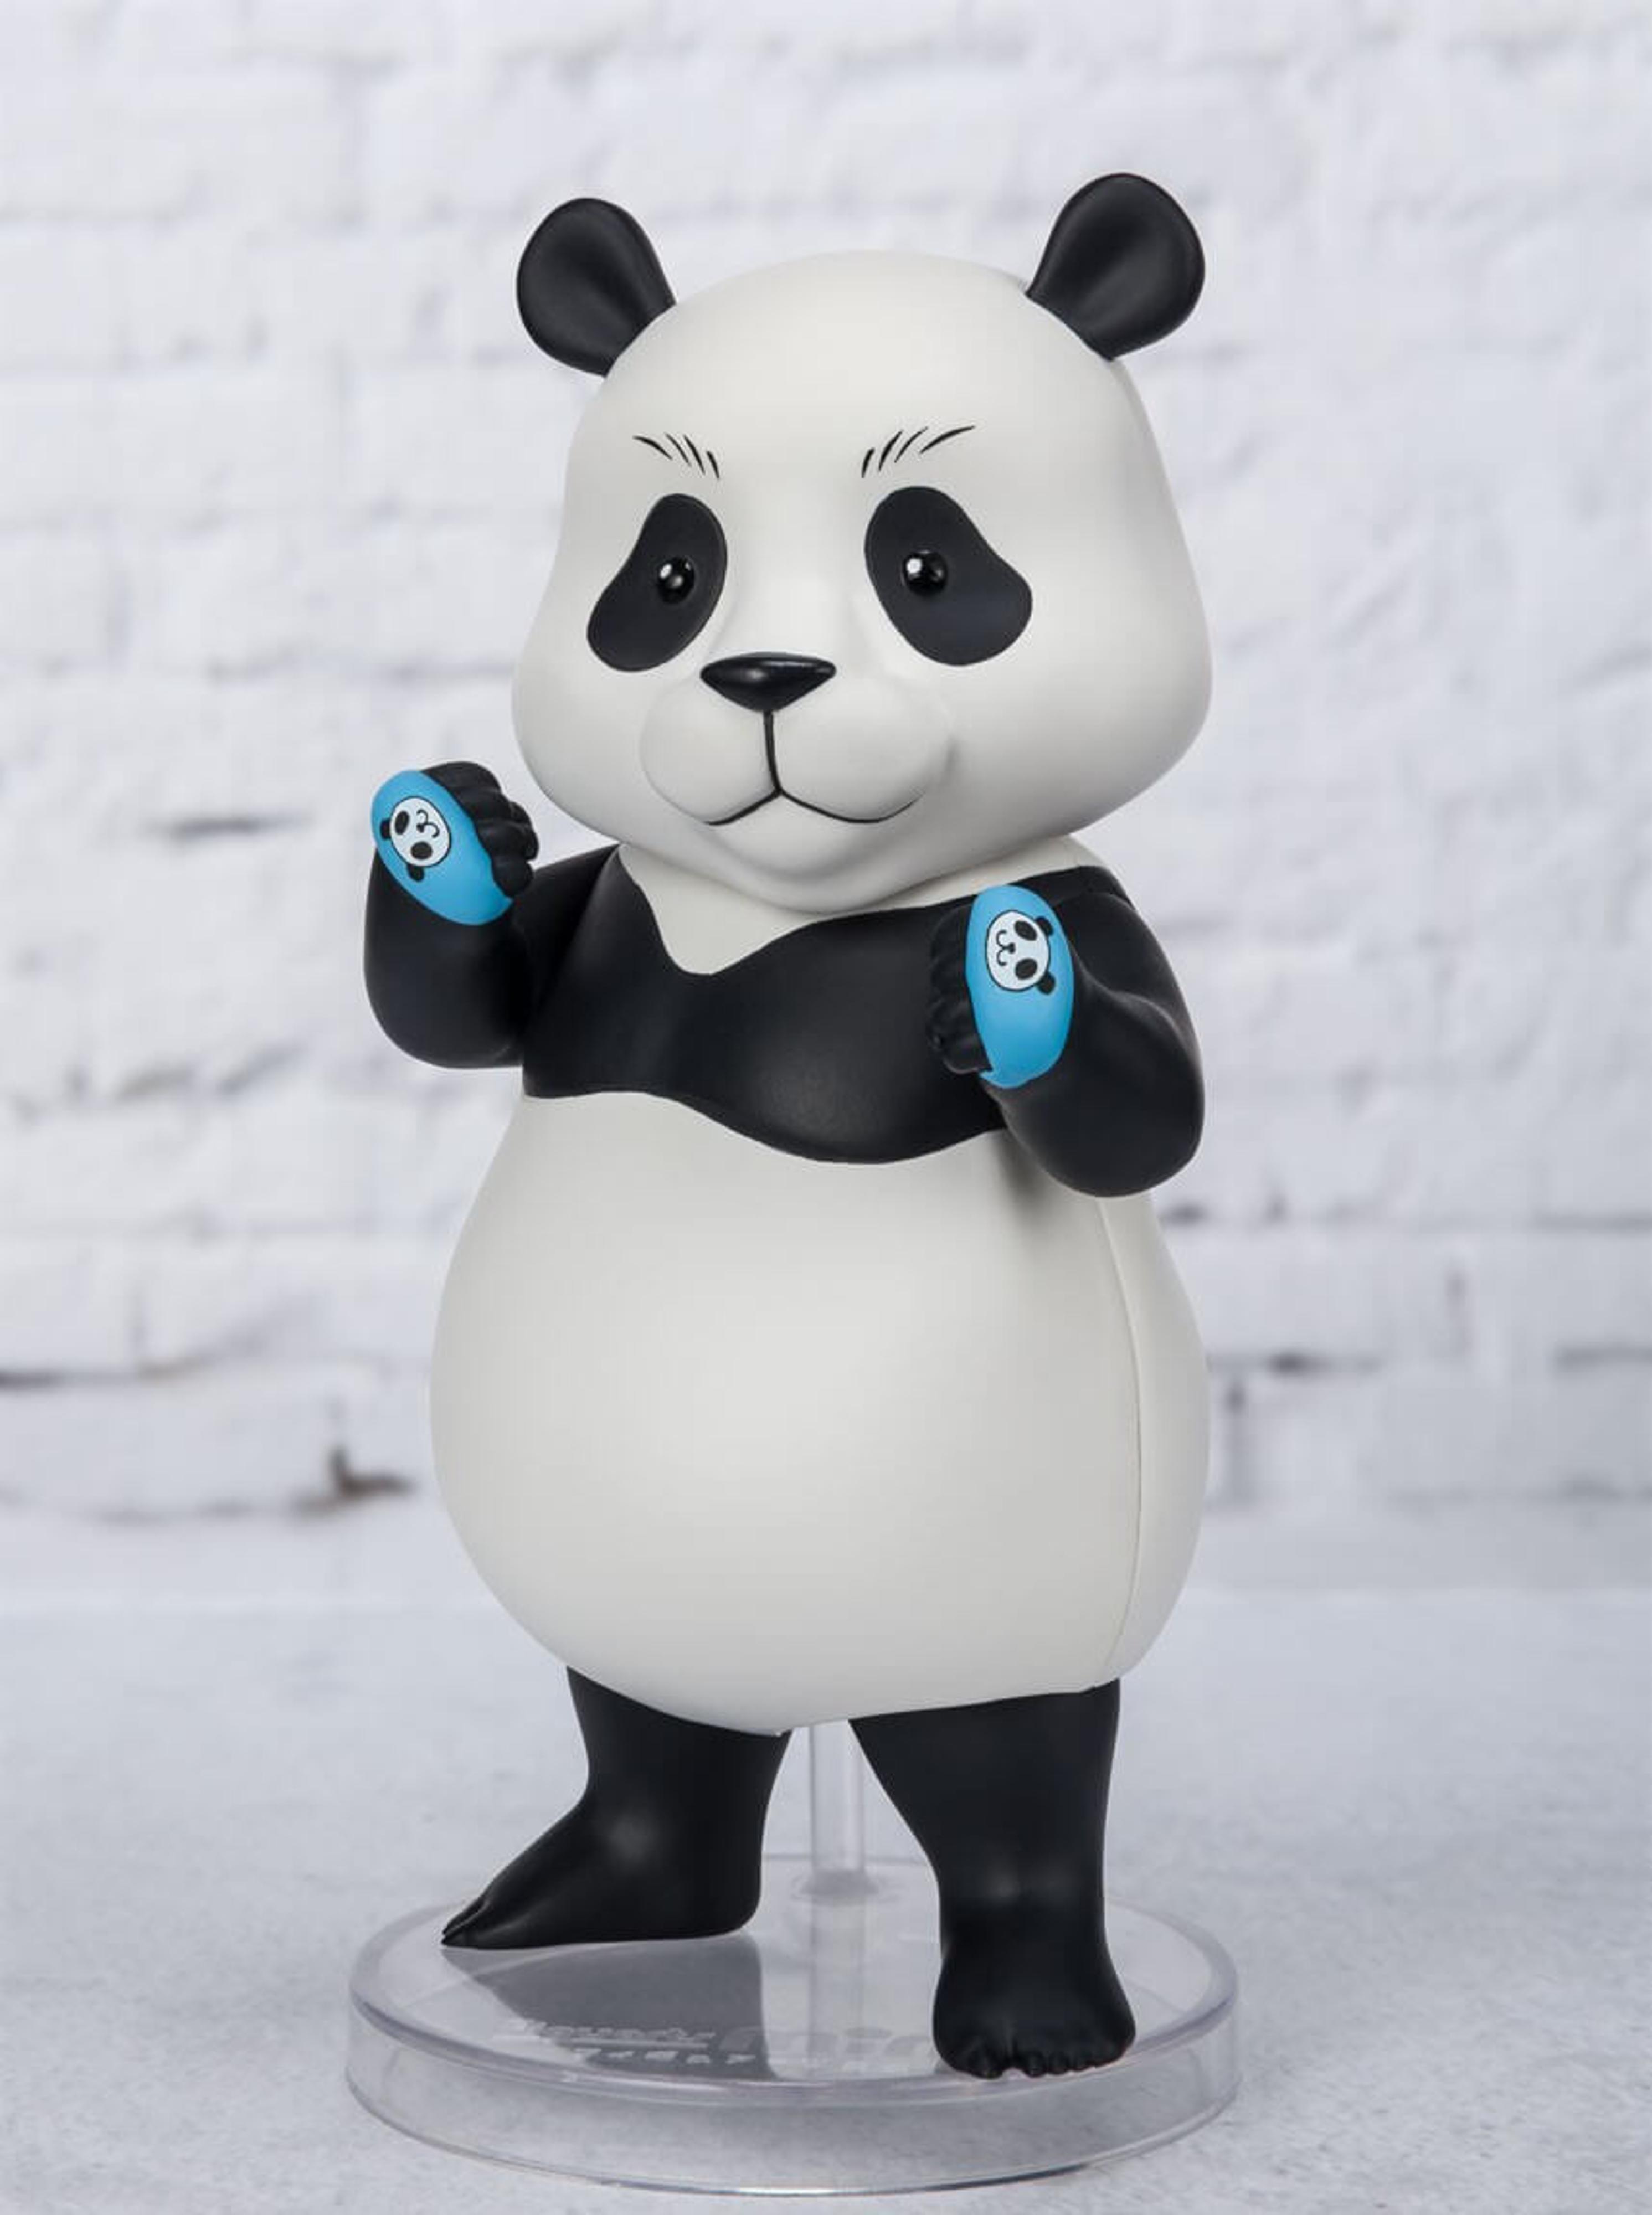 Figuarts Mini Jujutsu Kaizen Panda